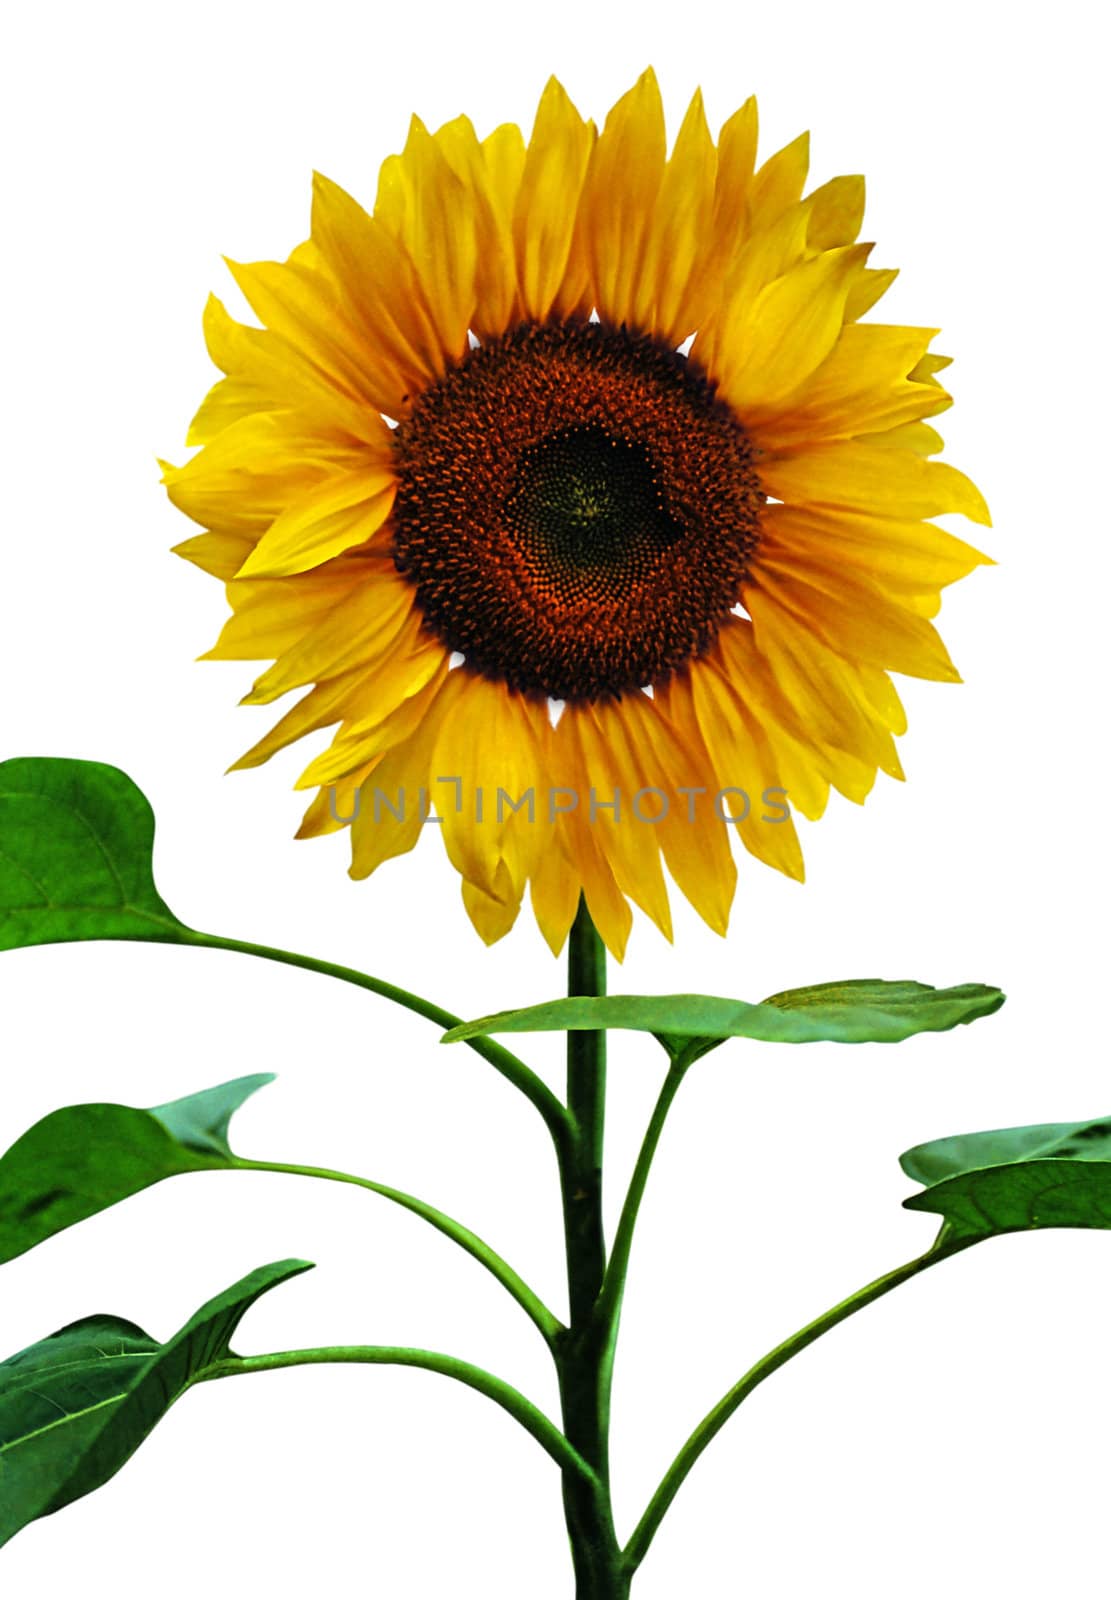 Sunflowers, isolated on white background